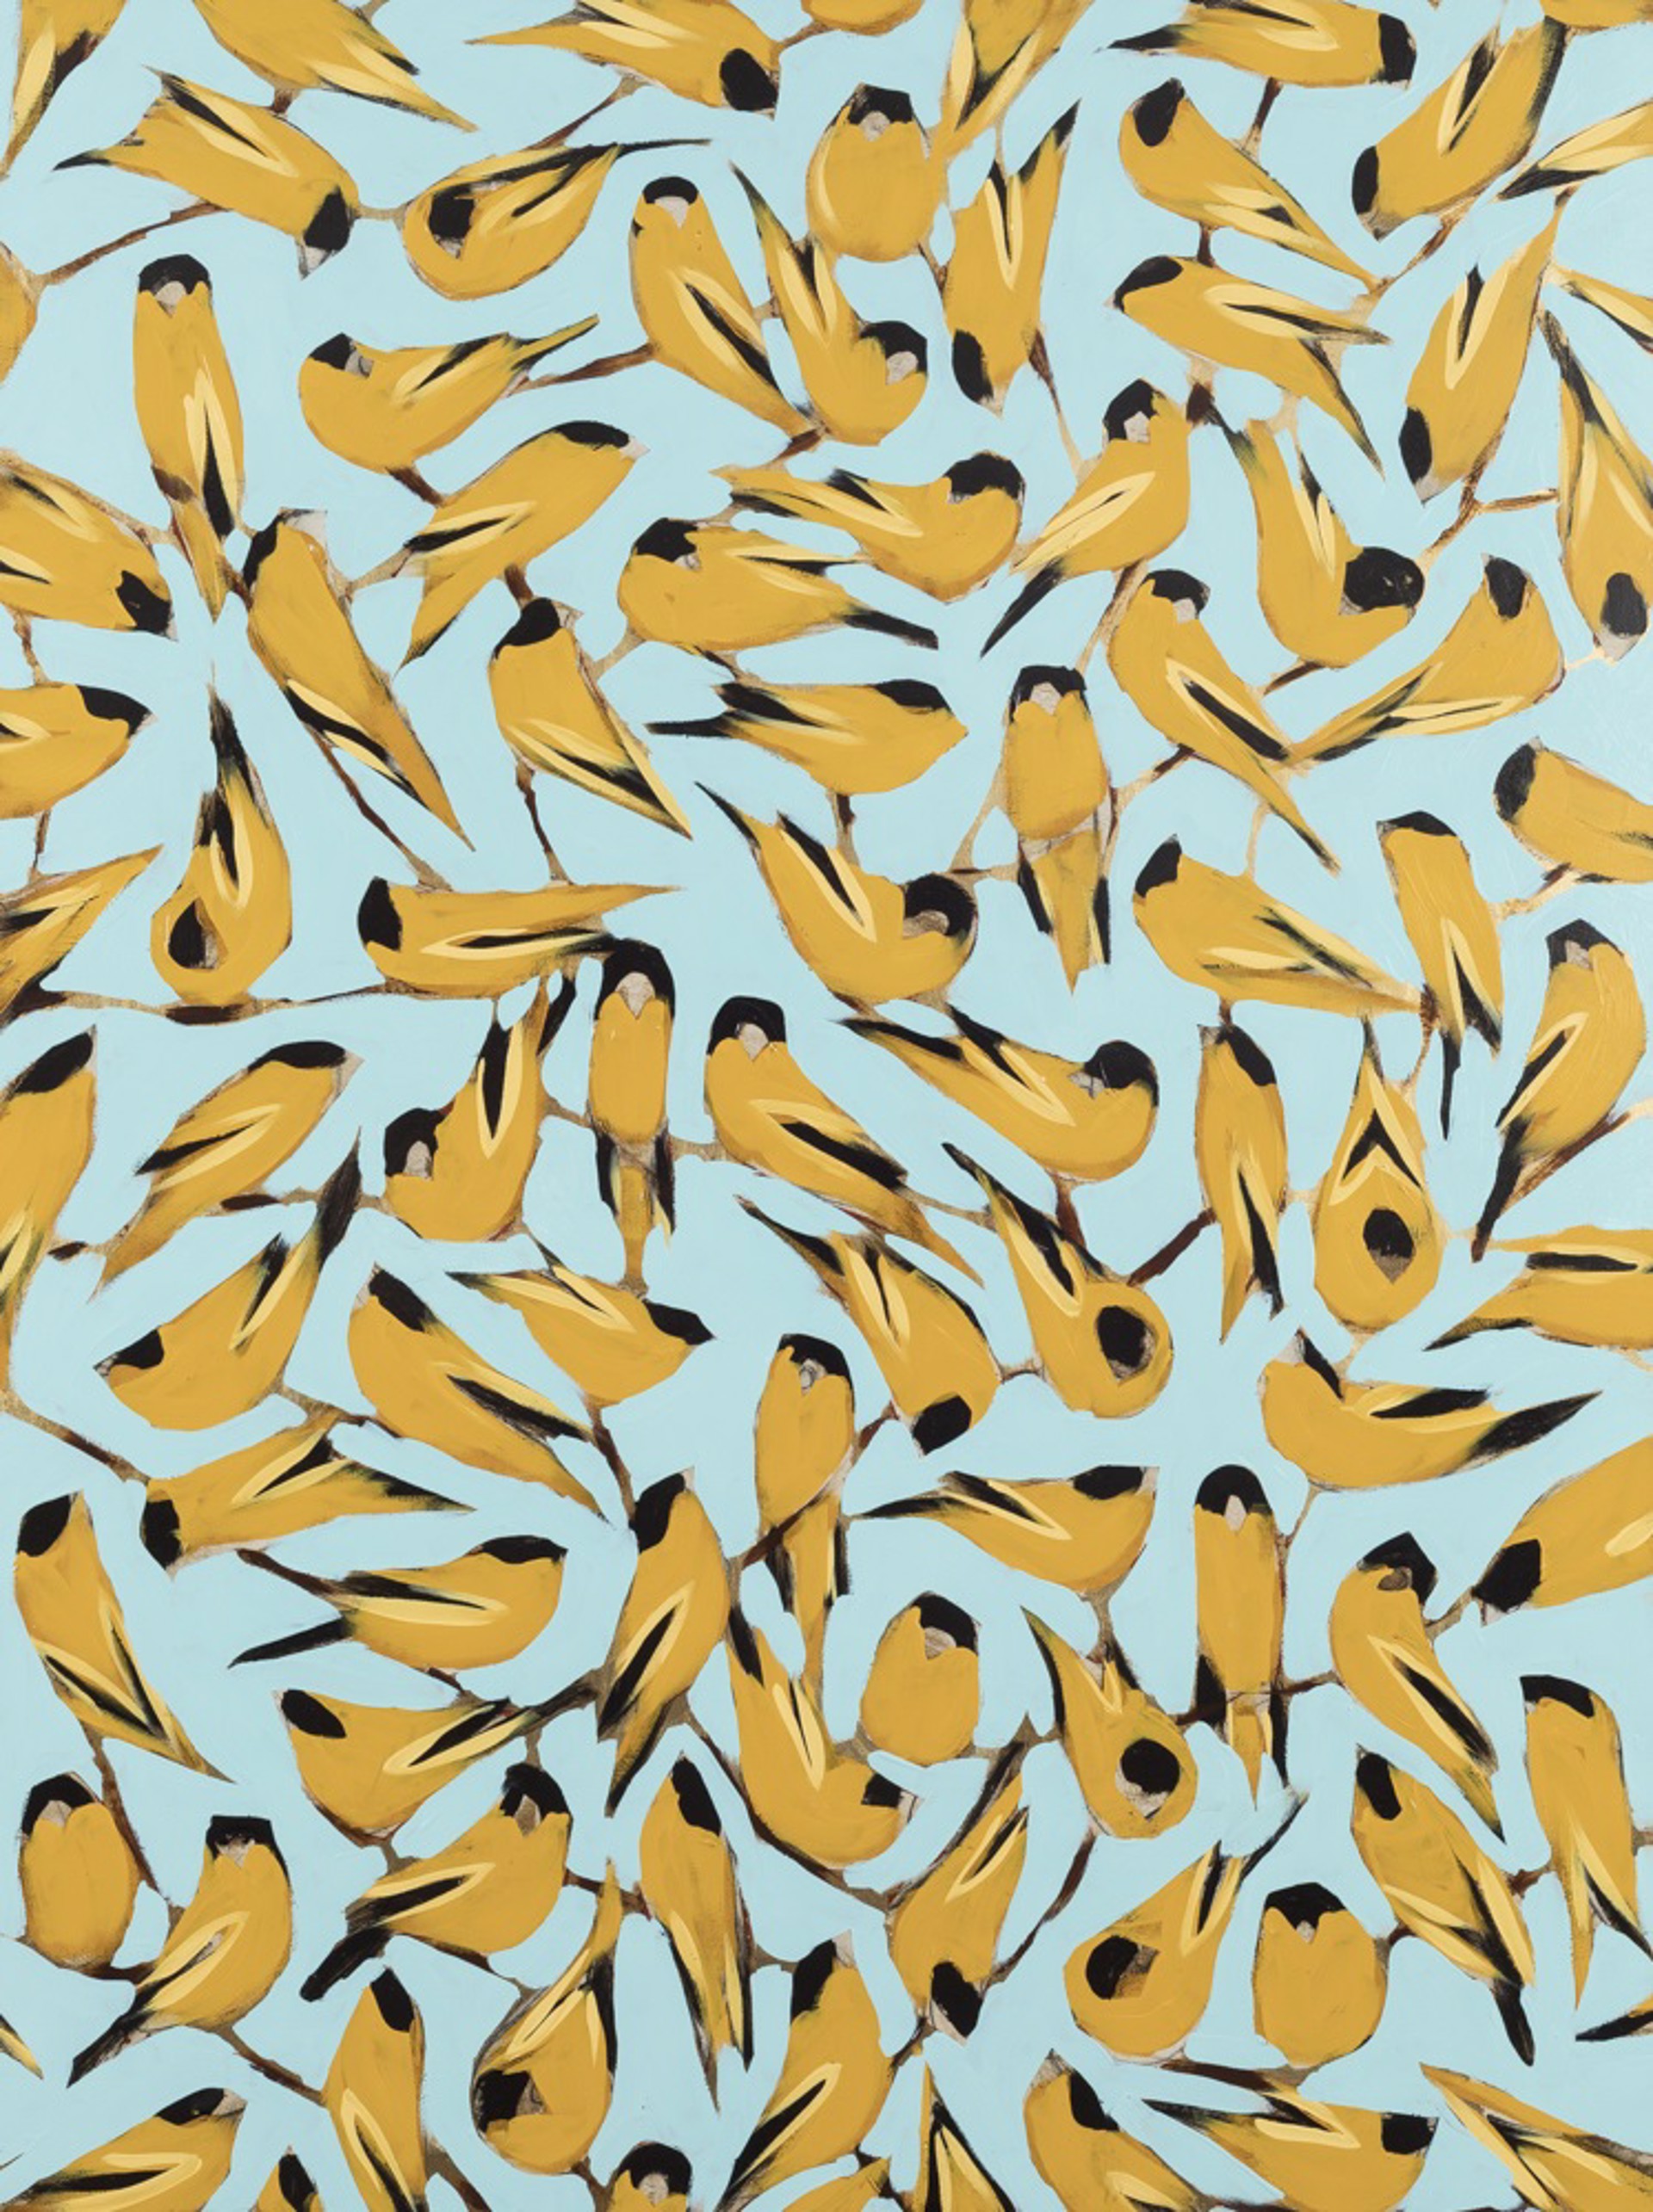 Goldfinches by Joseph Bradley